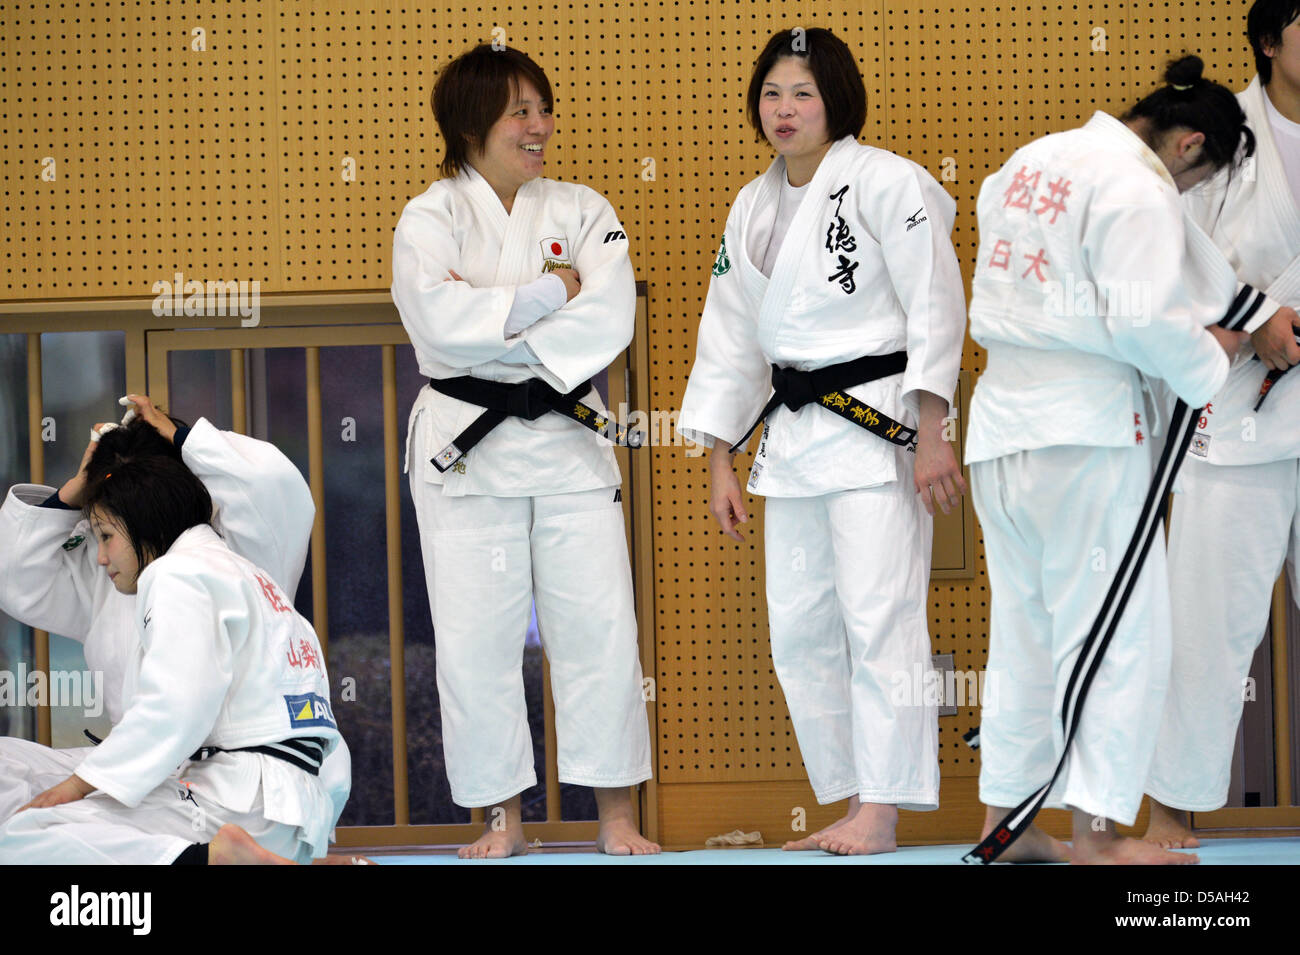 Tokyo, Japan. 27th March 2013. (L to R) Chiyori Masuchi (JPN), Tomoko Fukimi (JPN), MARCH 27, 2013 - Judo : Japan women's team training session at Ajinomoto National training center, Tokyo, Japan. (Photo by Jun Tsukida/AFLO SPORT/Alamy Live News) Stock Photo